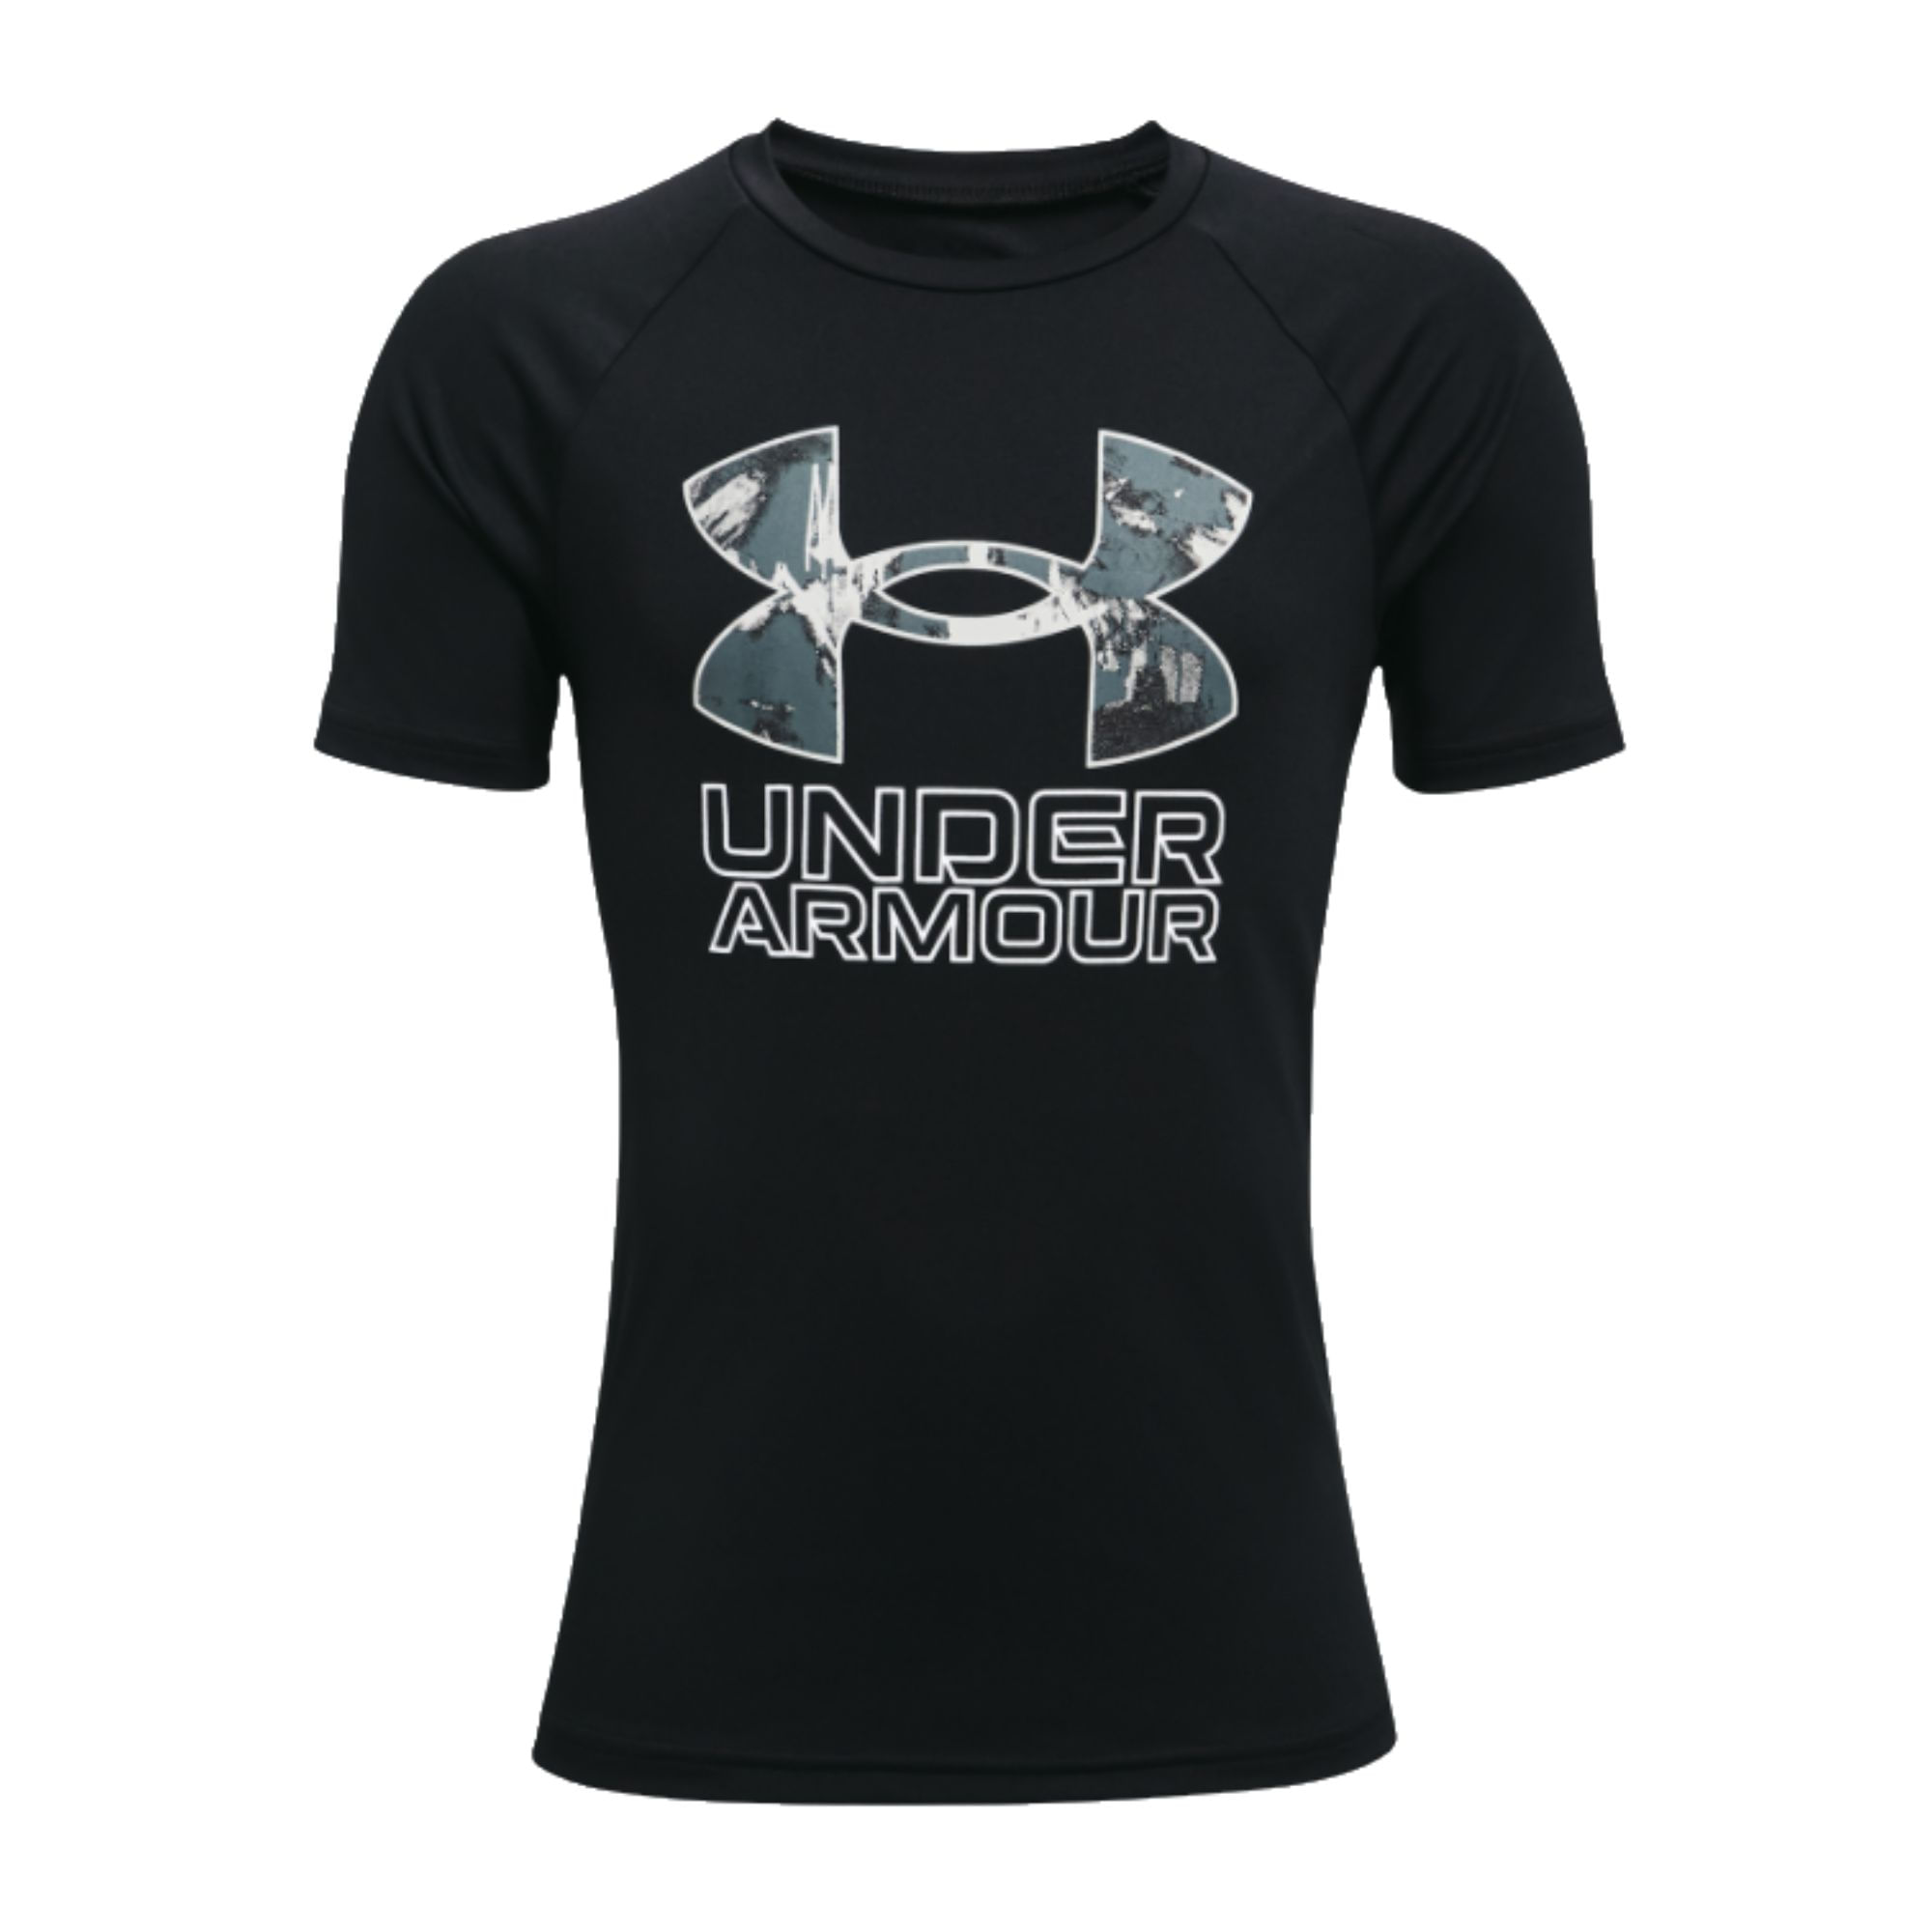 Camiseta Under Armour Tech 2.0 SS Infantil - Azul - Bayard Esportes